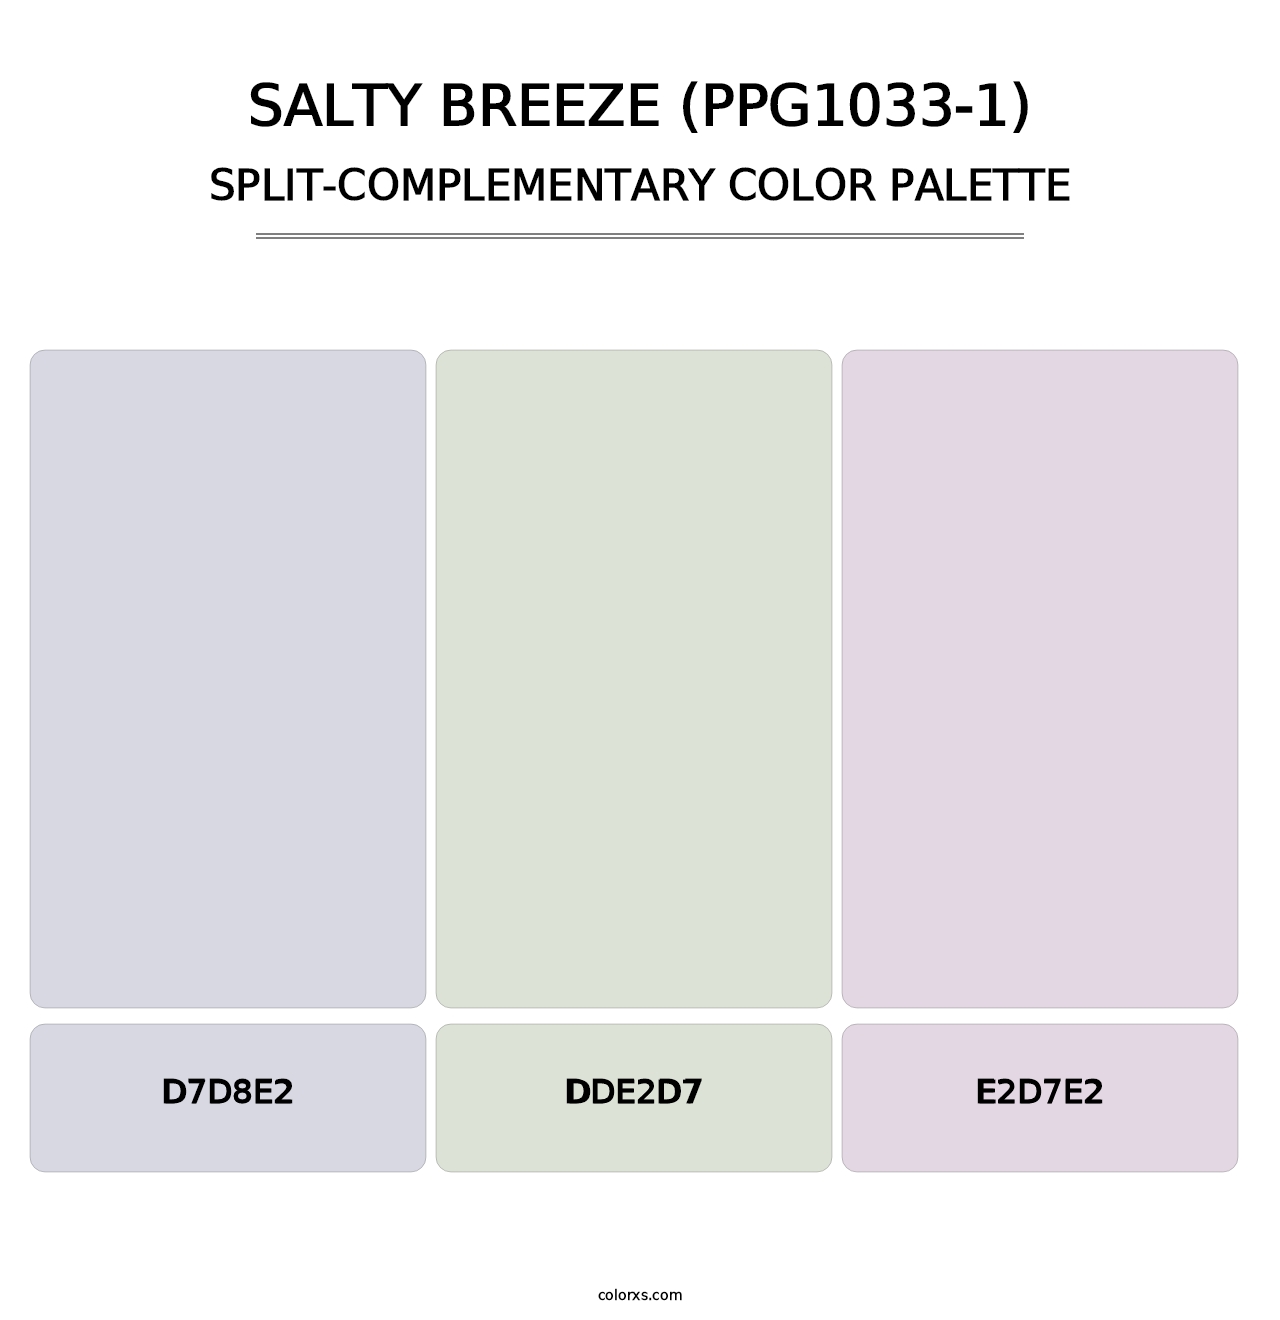 Salty Breeze (PPG1033-1) - Split-Complementary Color Palette